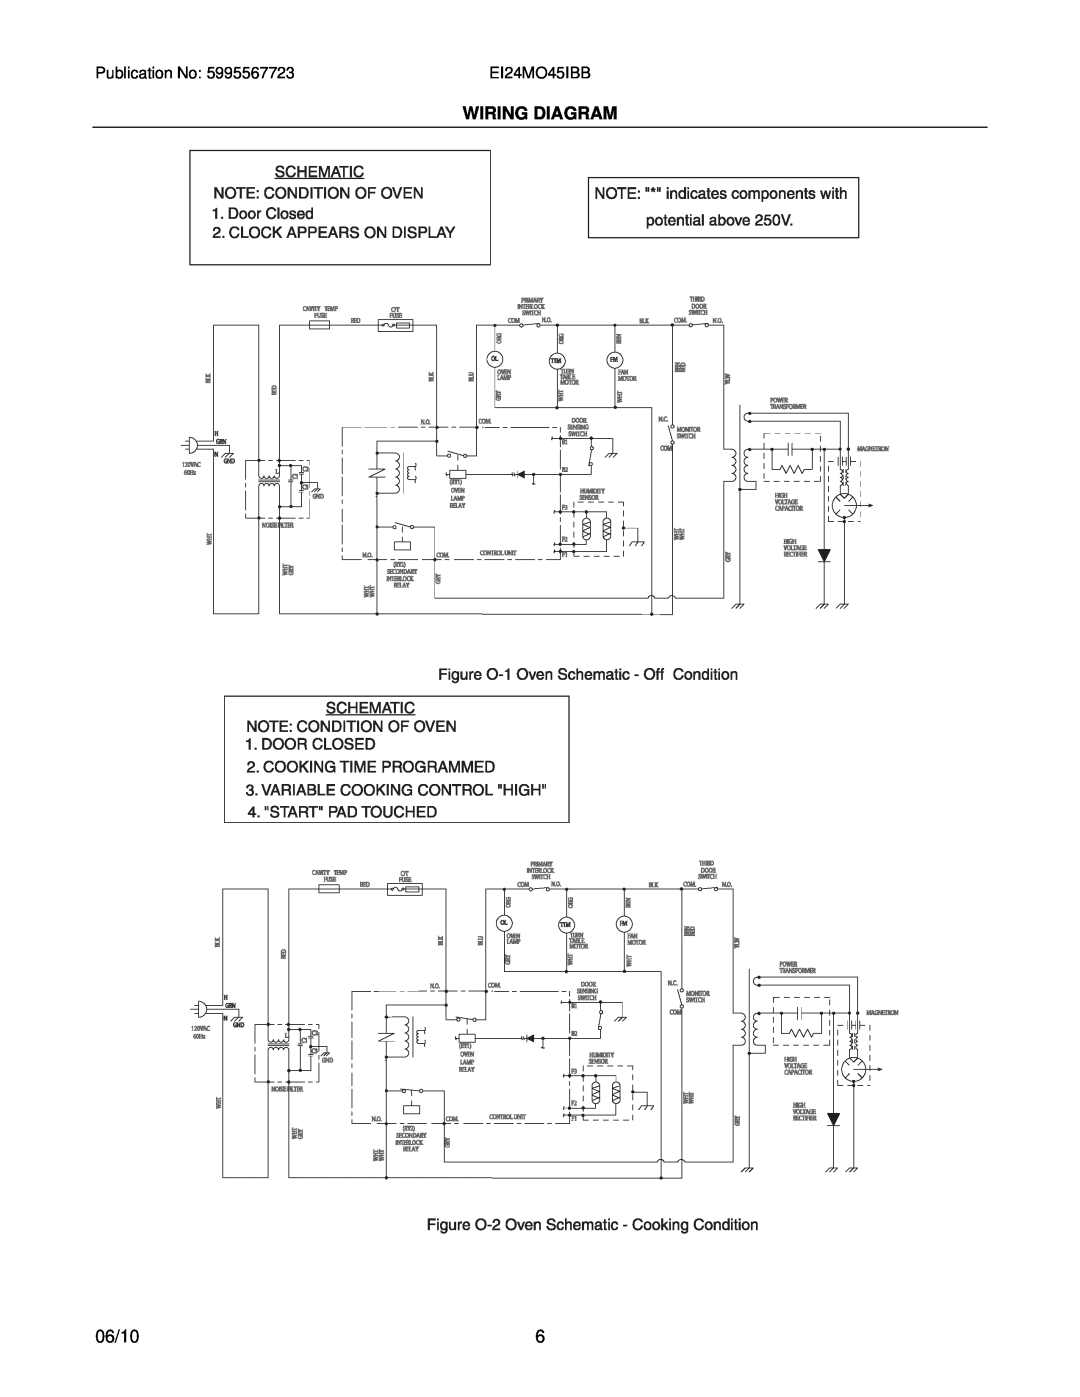 Electrolux EI24MO45IBB installation instructions Wiring Diagram, 06/10 